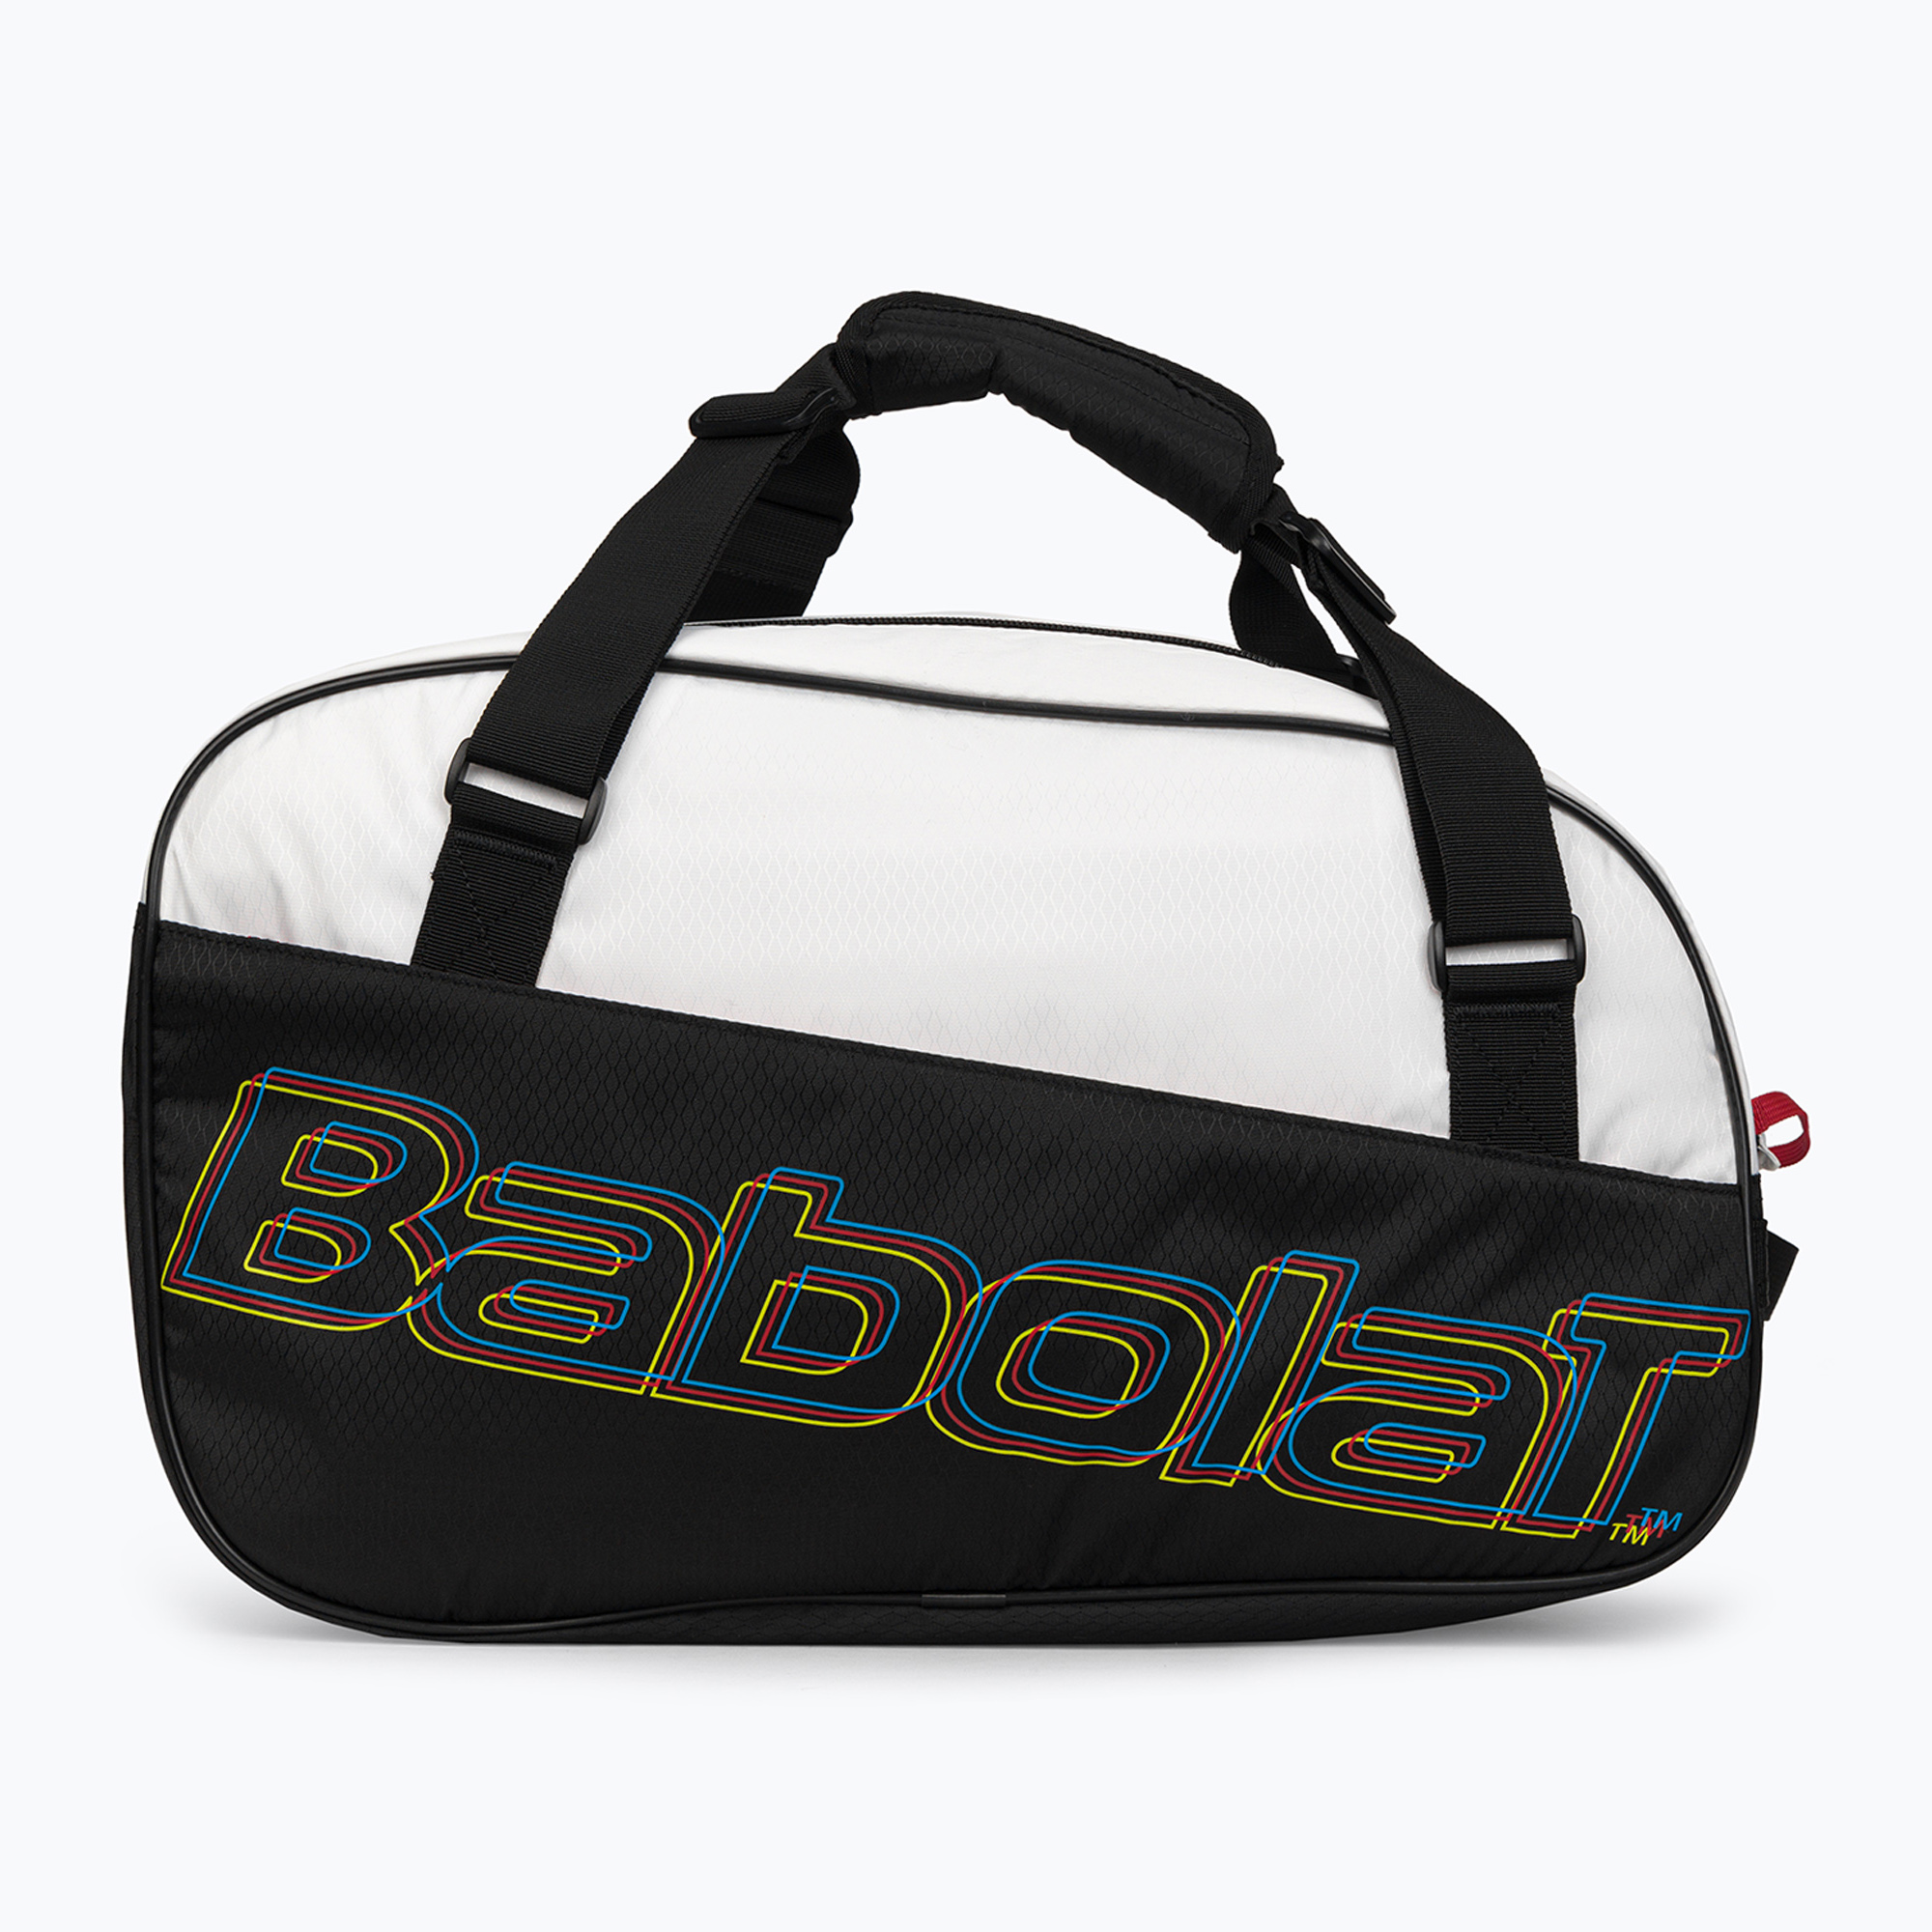 Babolat Rh Padel Lite 35 l padel bag white and black 759010